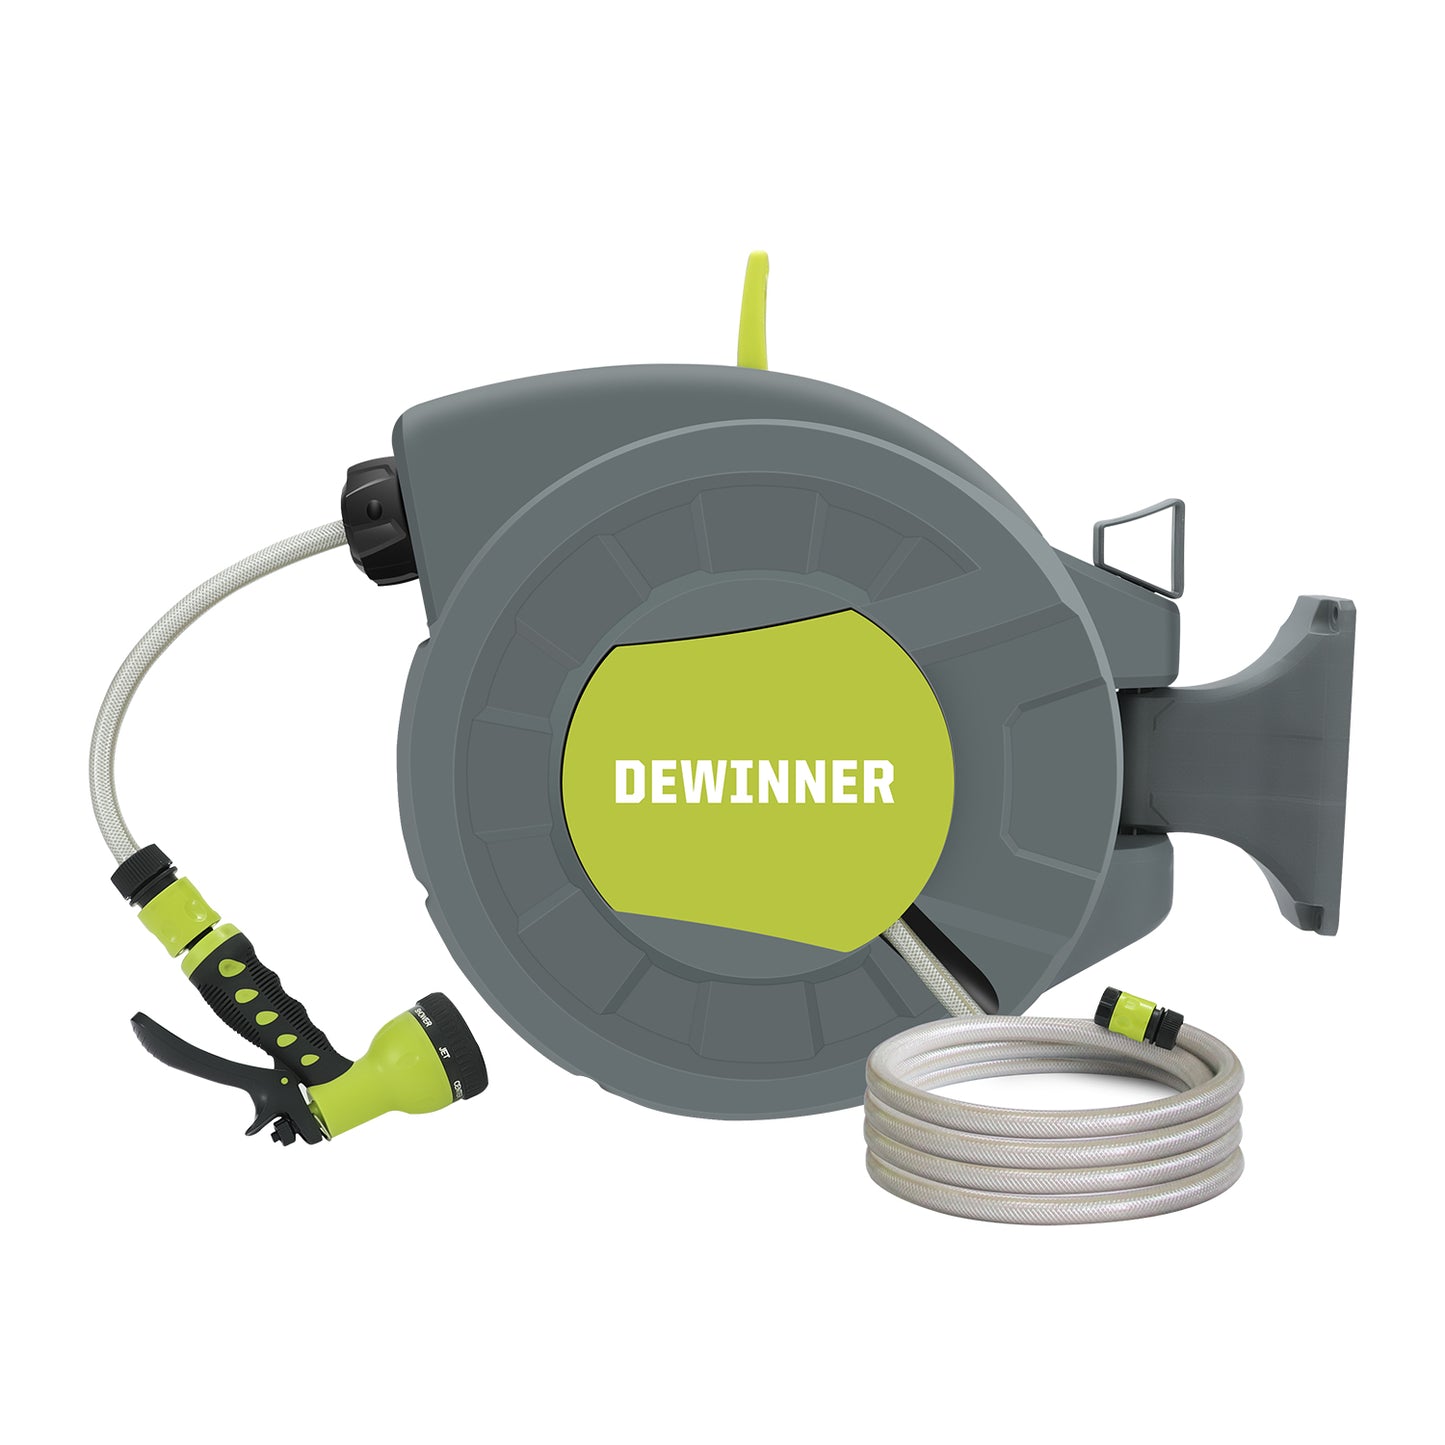 DEWINNER Garden Hose Reel, Auto Rewind Wall-Mounted Reel, Hose Locking Mechanism, 180° Swivel Pivot , 25M Hose Pipe+2M Tap Connect Hose for Outdoor Watering